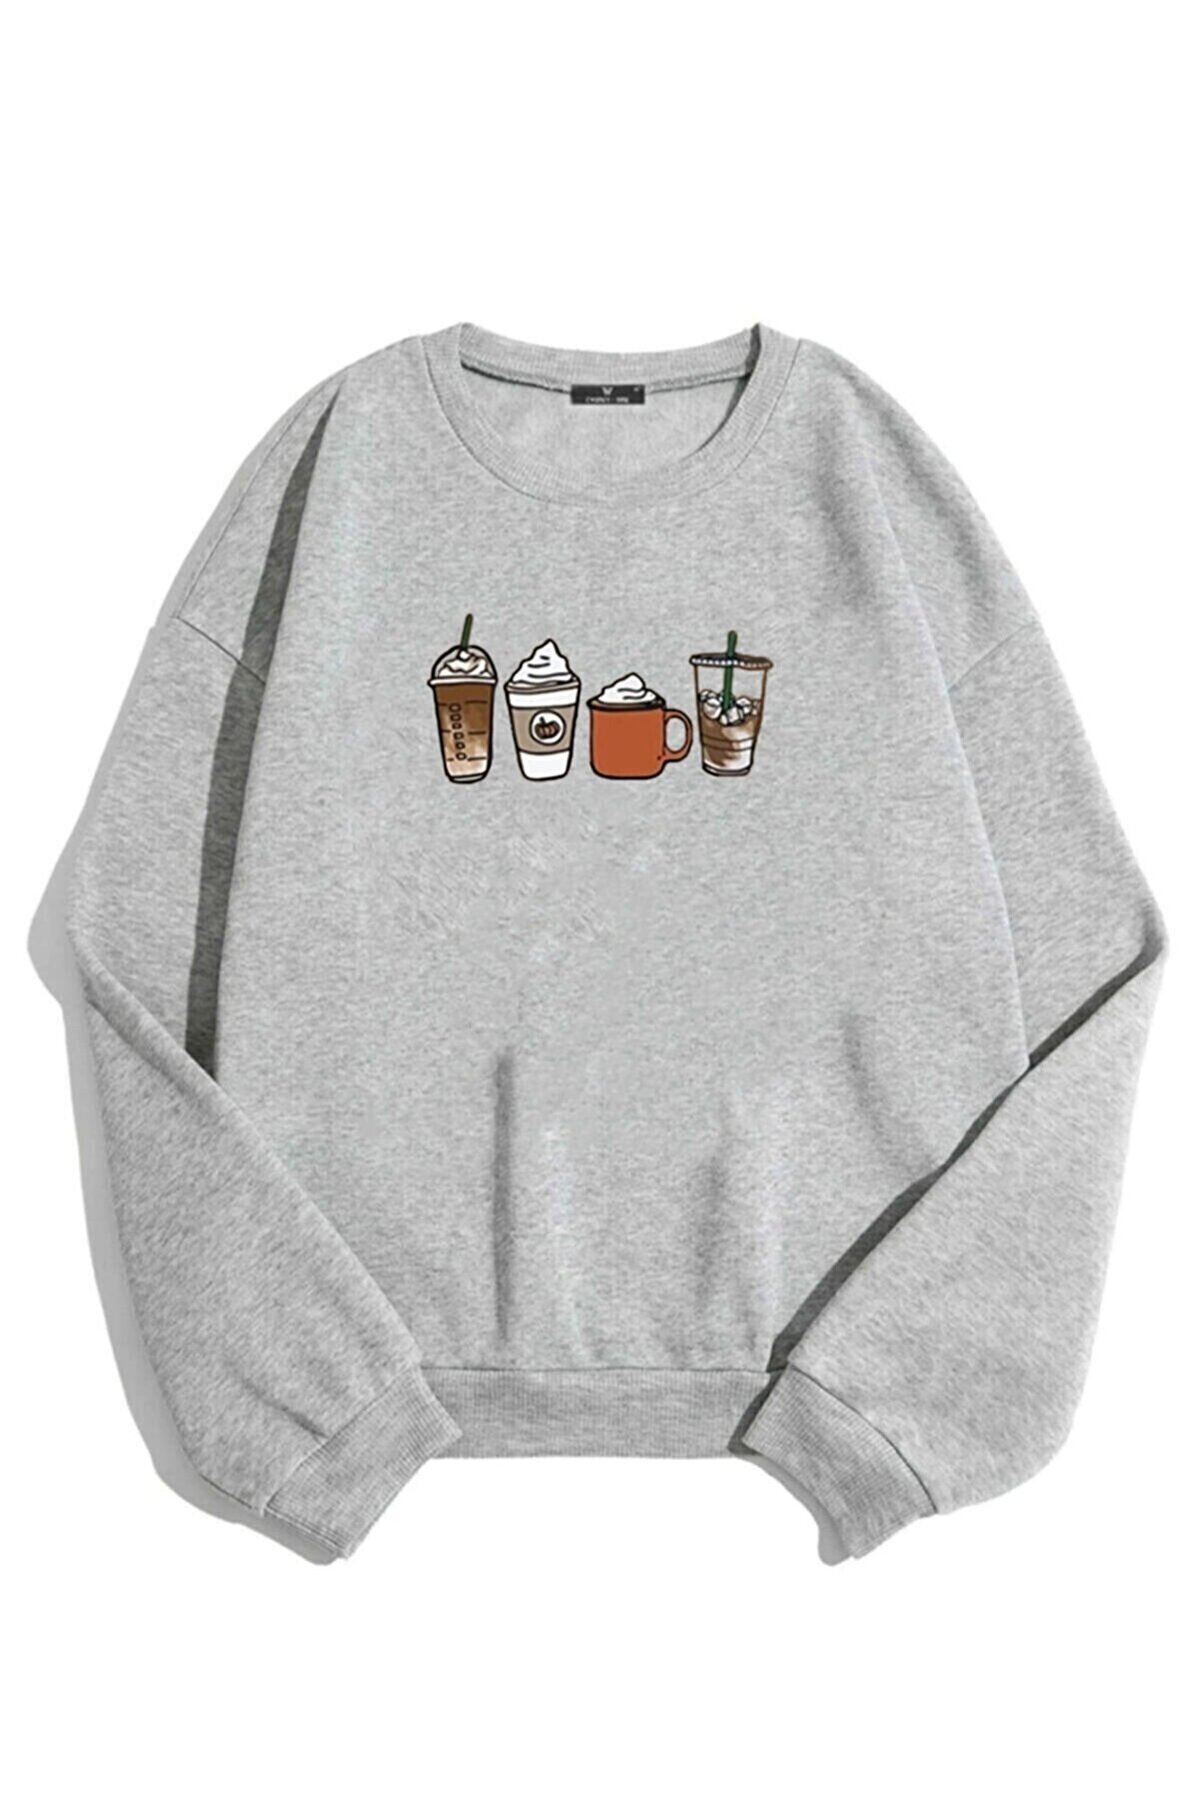 Know Women's Gray Oversize Coffee Printed Sweatshirt